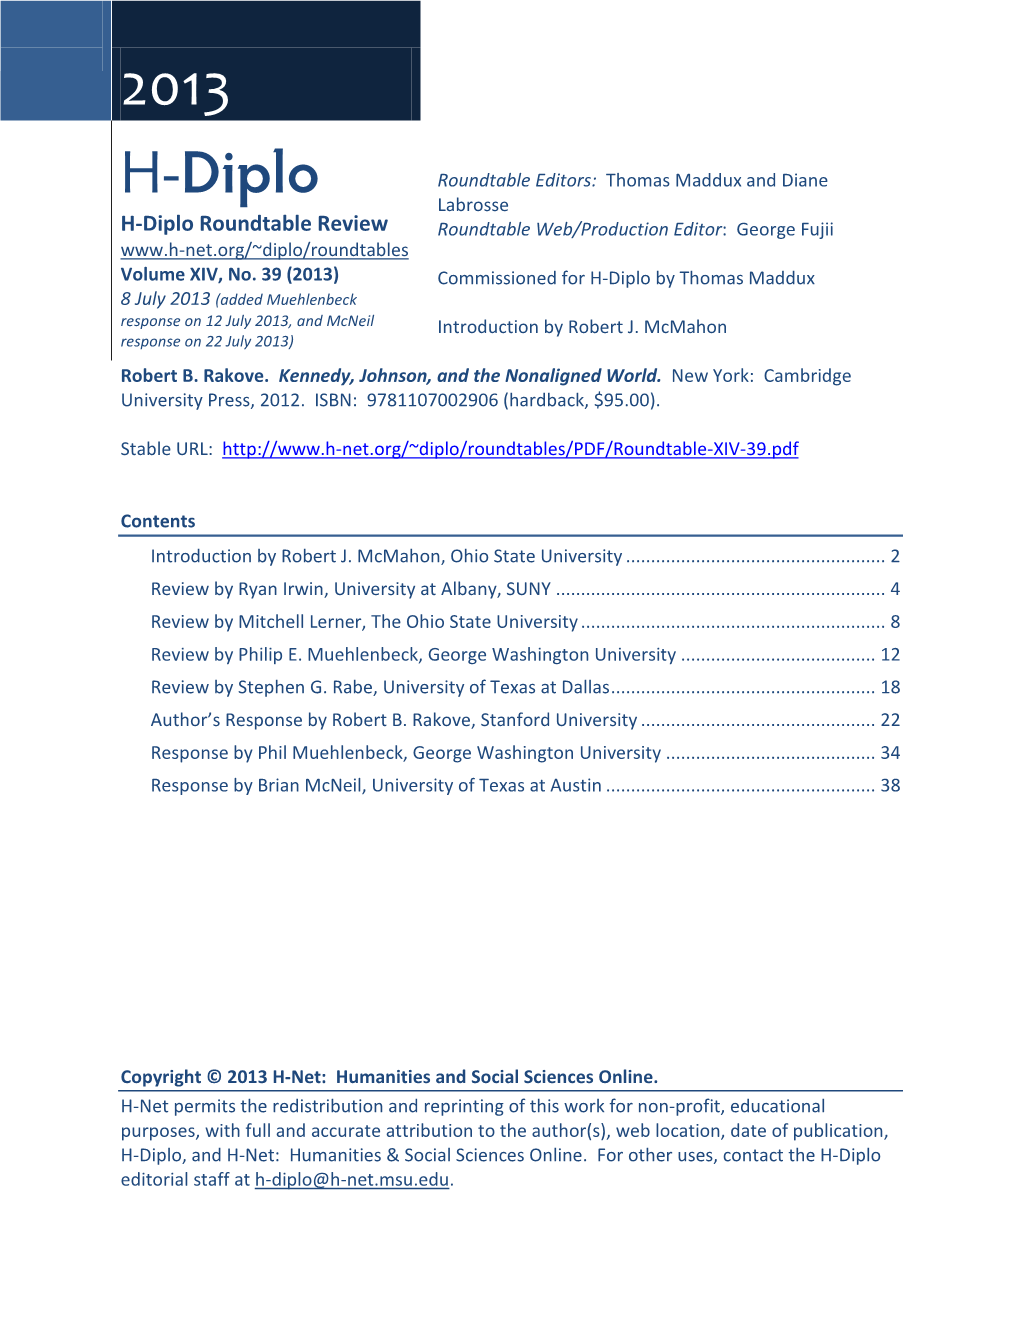 H-Diplo Roundtable, Vol. XIV, No. 39